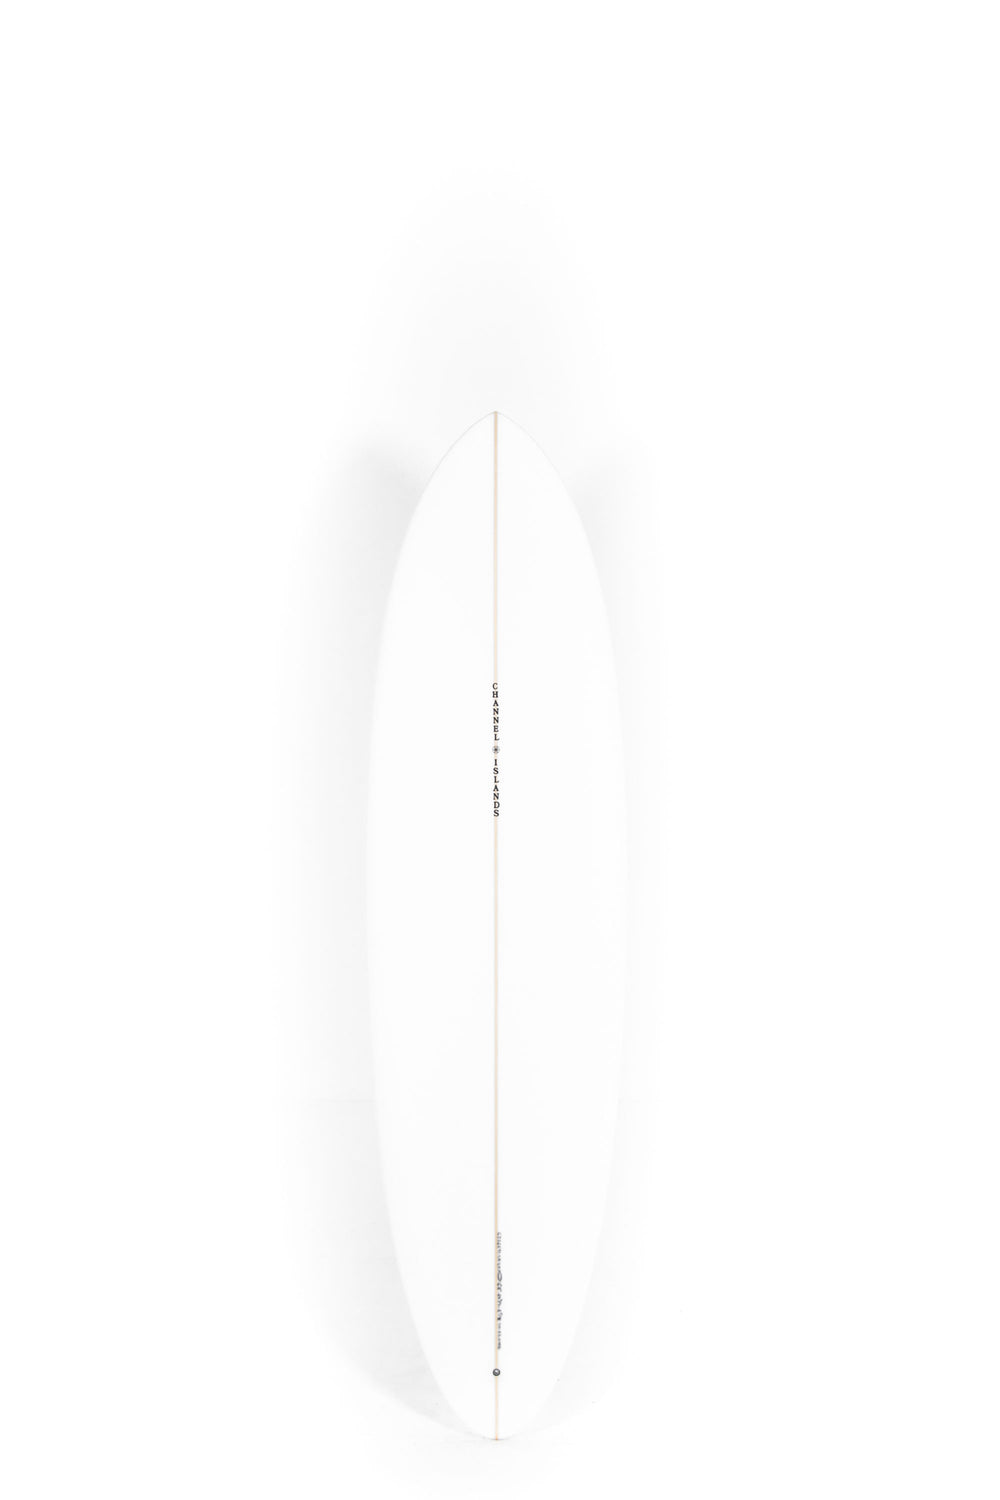 Pukas-Surf-Shop-Channel-Island-Surfboards-CI-Mid-Al-Merrick-6_8_-CI32691